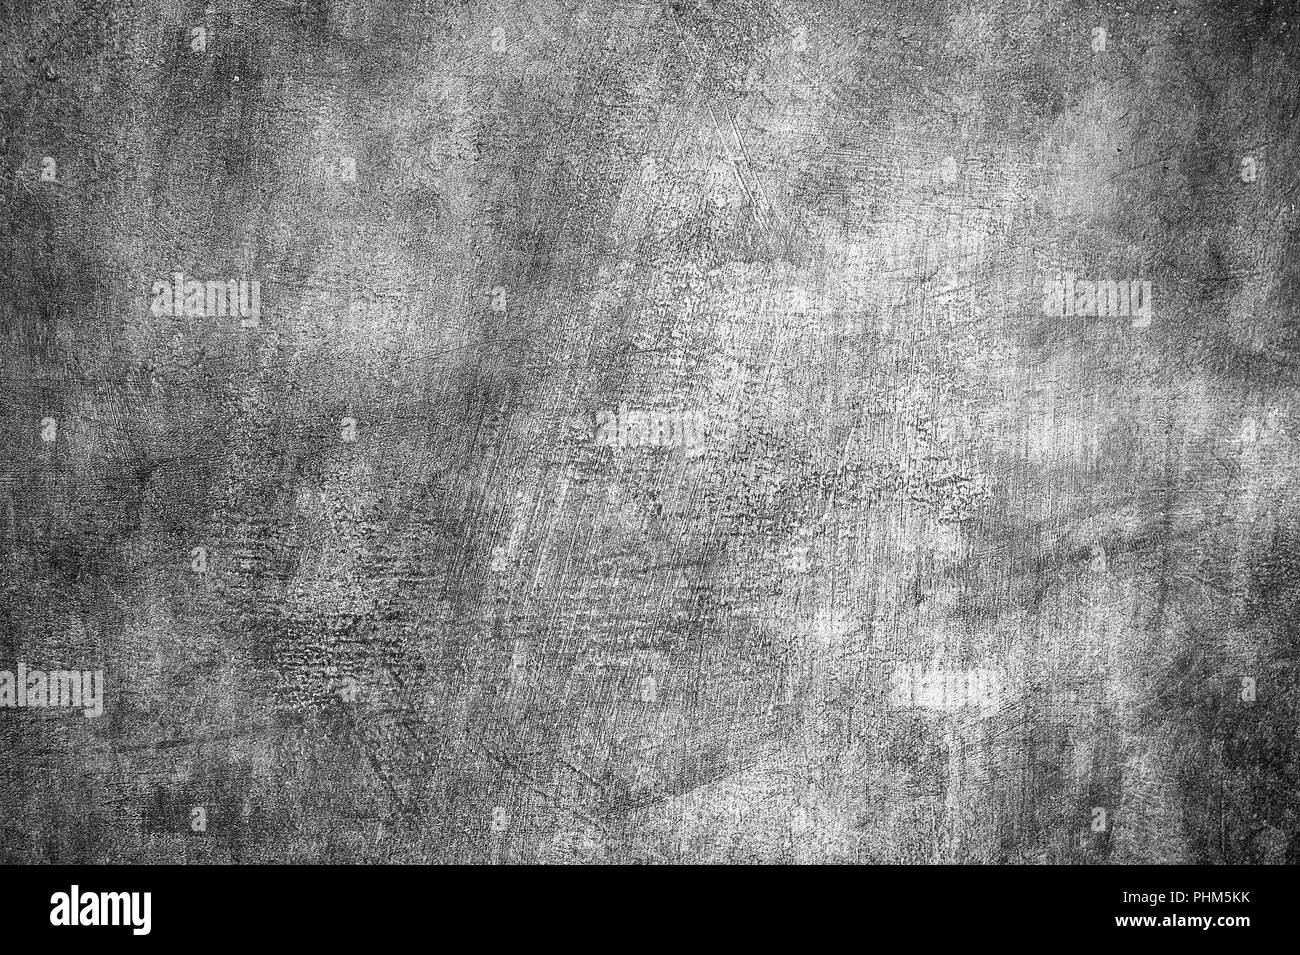 Grunge wall. High resolution textured background. Stock Photo